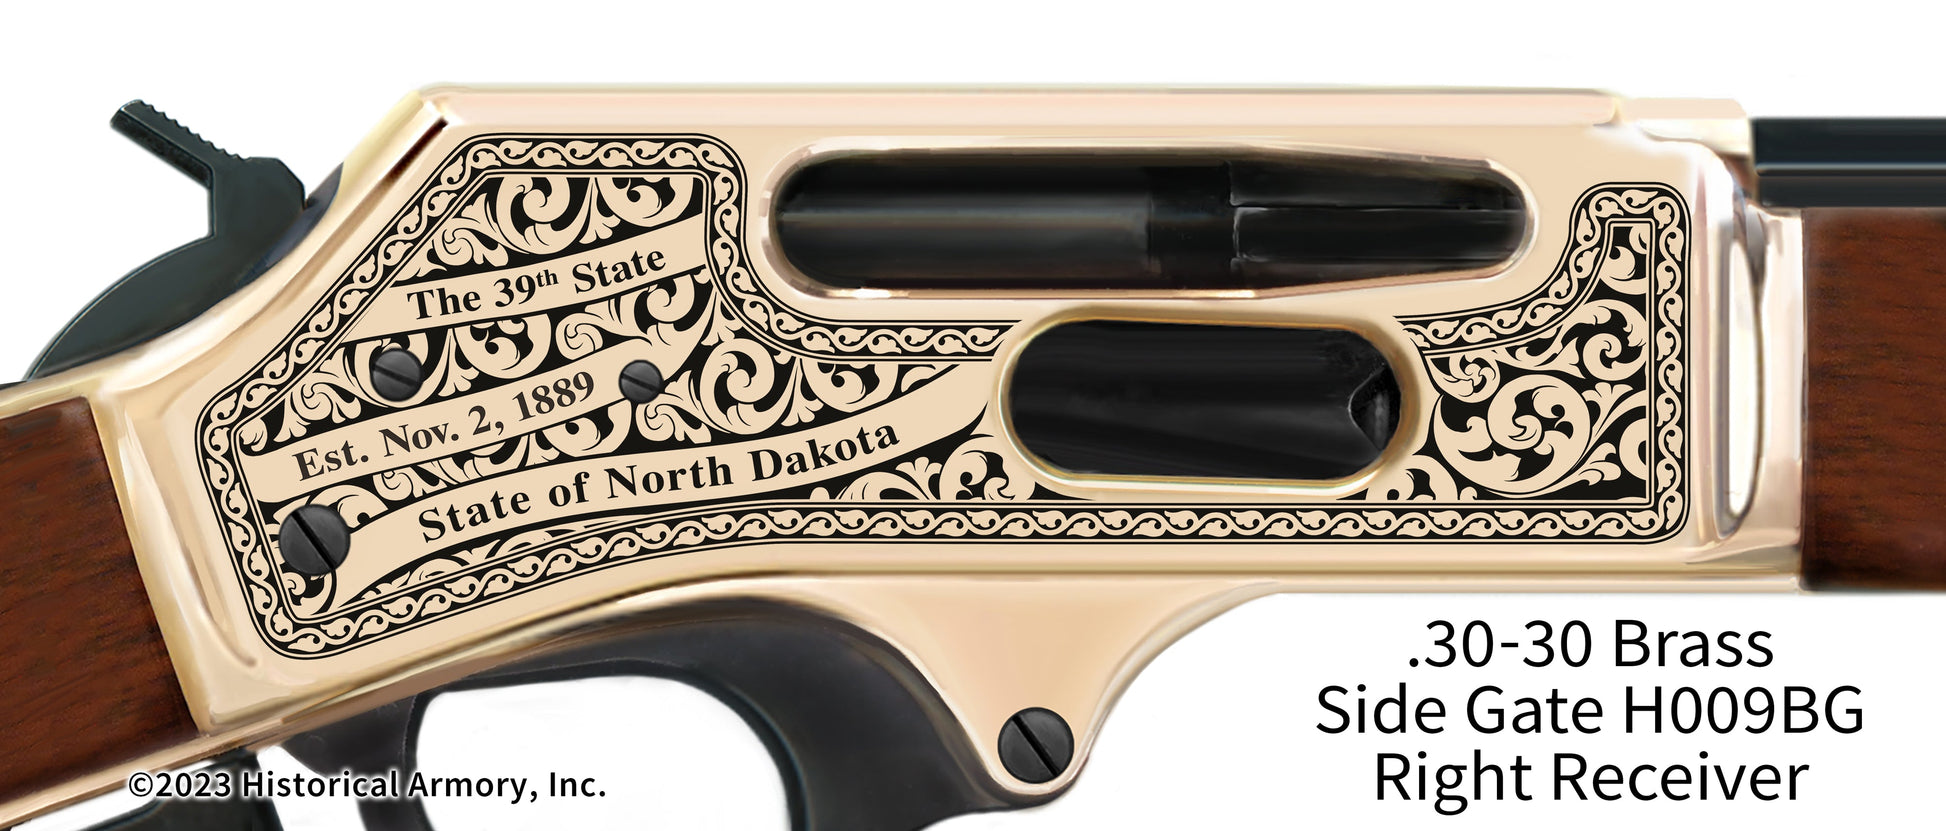 Nelson County North Dakota Engraved Henry .30-30 Brass Side Gate Rifle